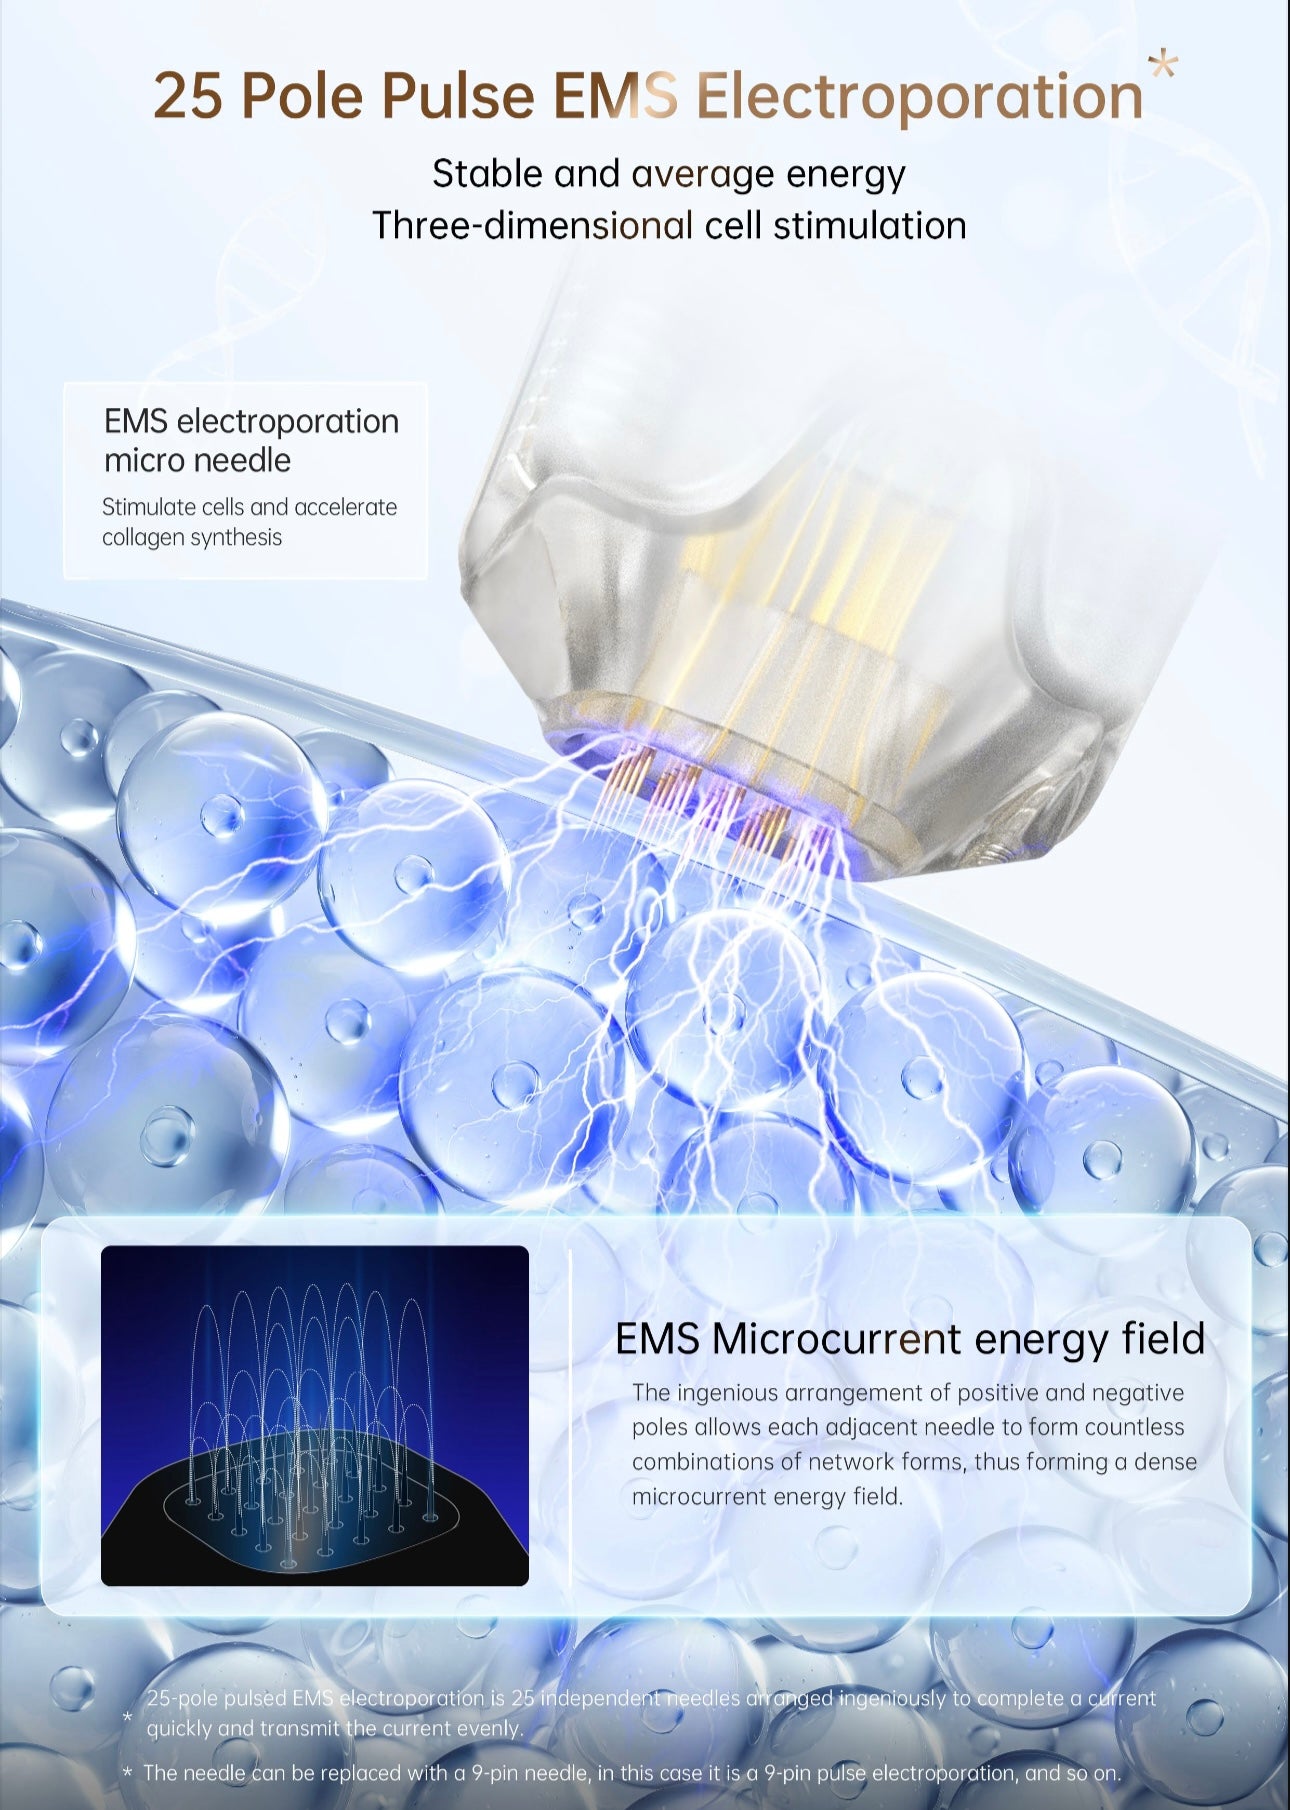 Bio pen Q2 Auto MTS Electroporation Microneedling EMS LED Triple effects Rejuvenate the skin2024 - 5SKINLAB